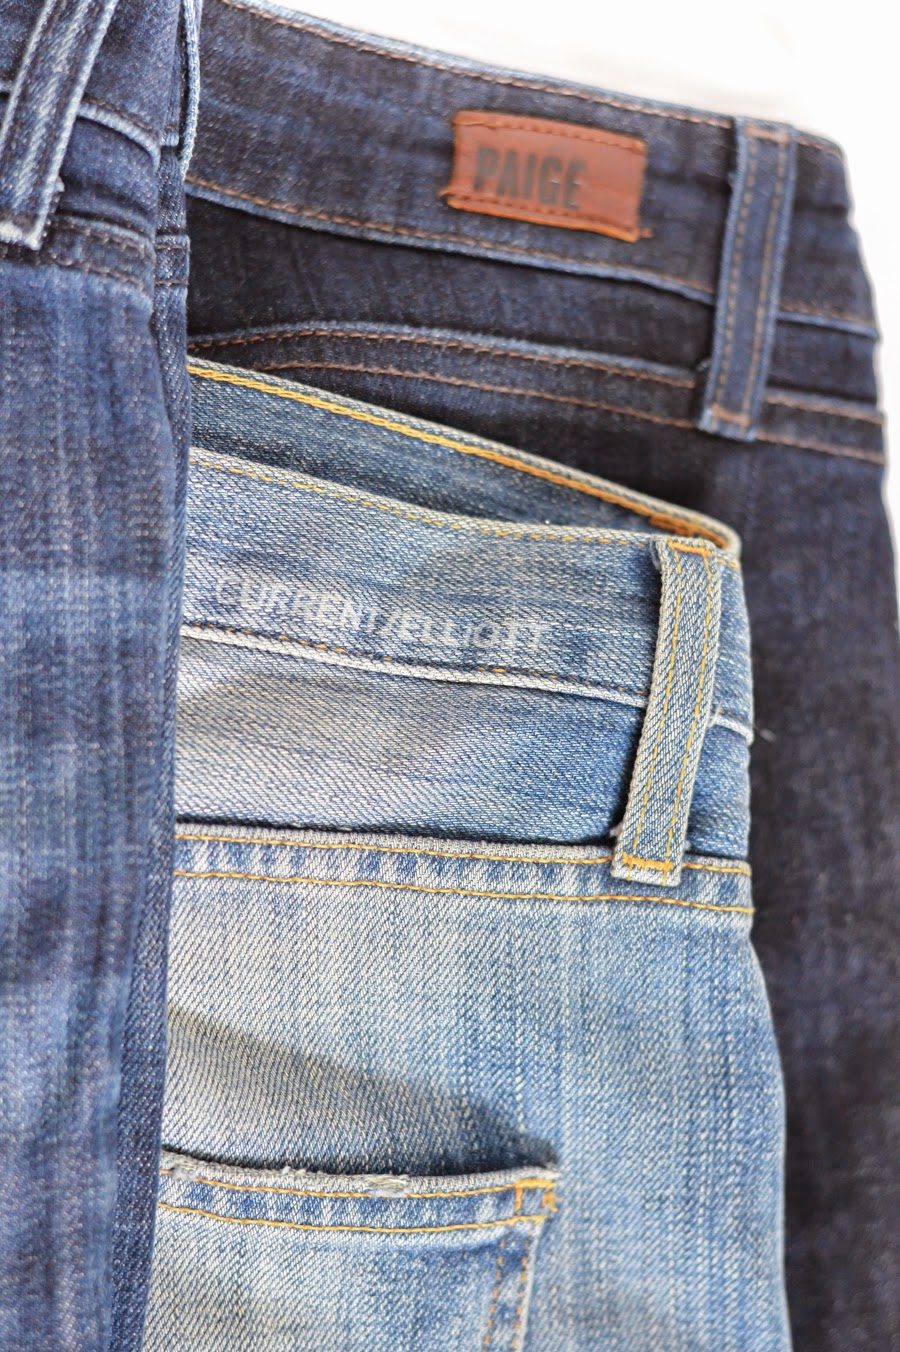 Should You Wash Jeans